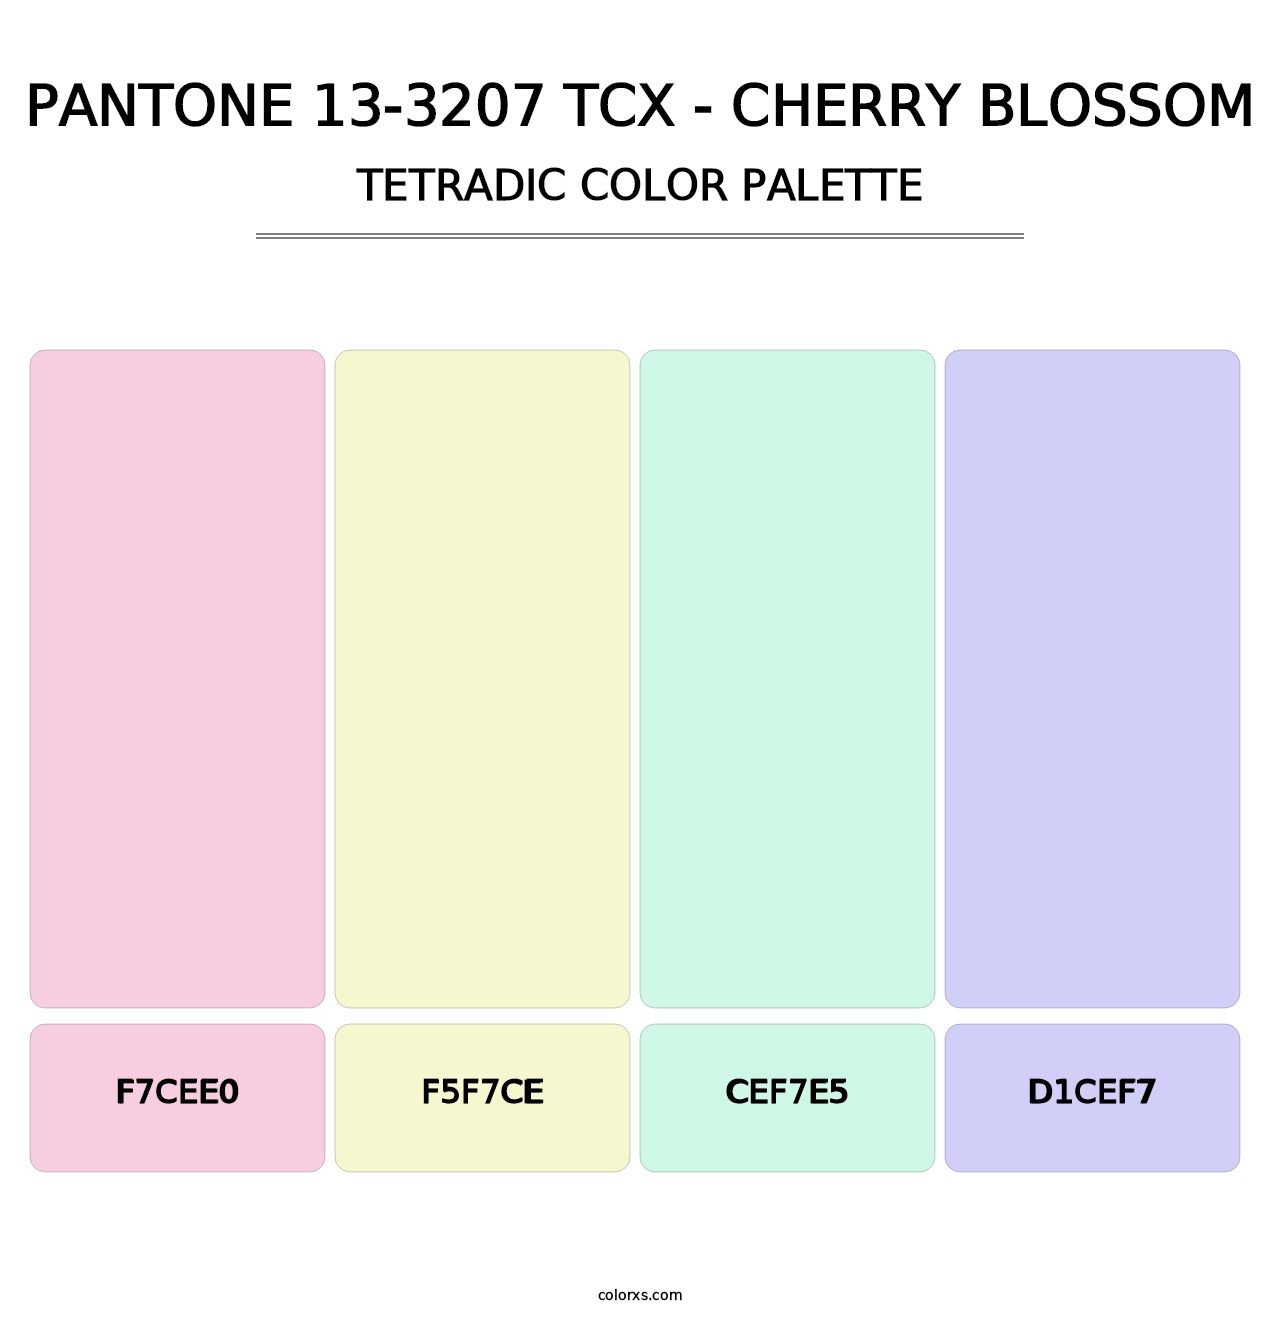 PANTONE 13-3207 TCX - Cherry Blossom - Tetradic Color Palette